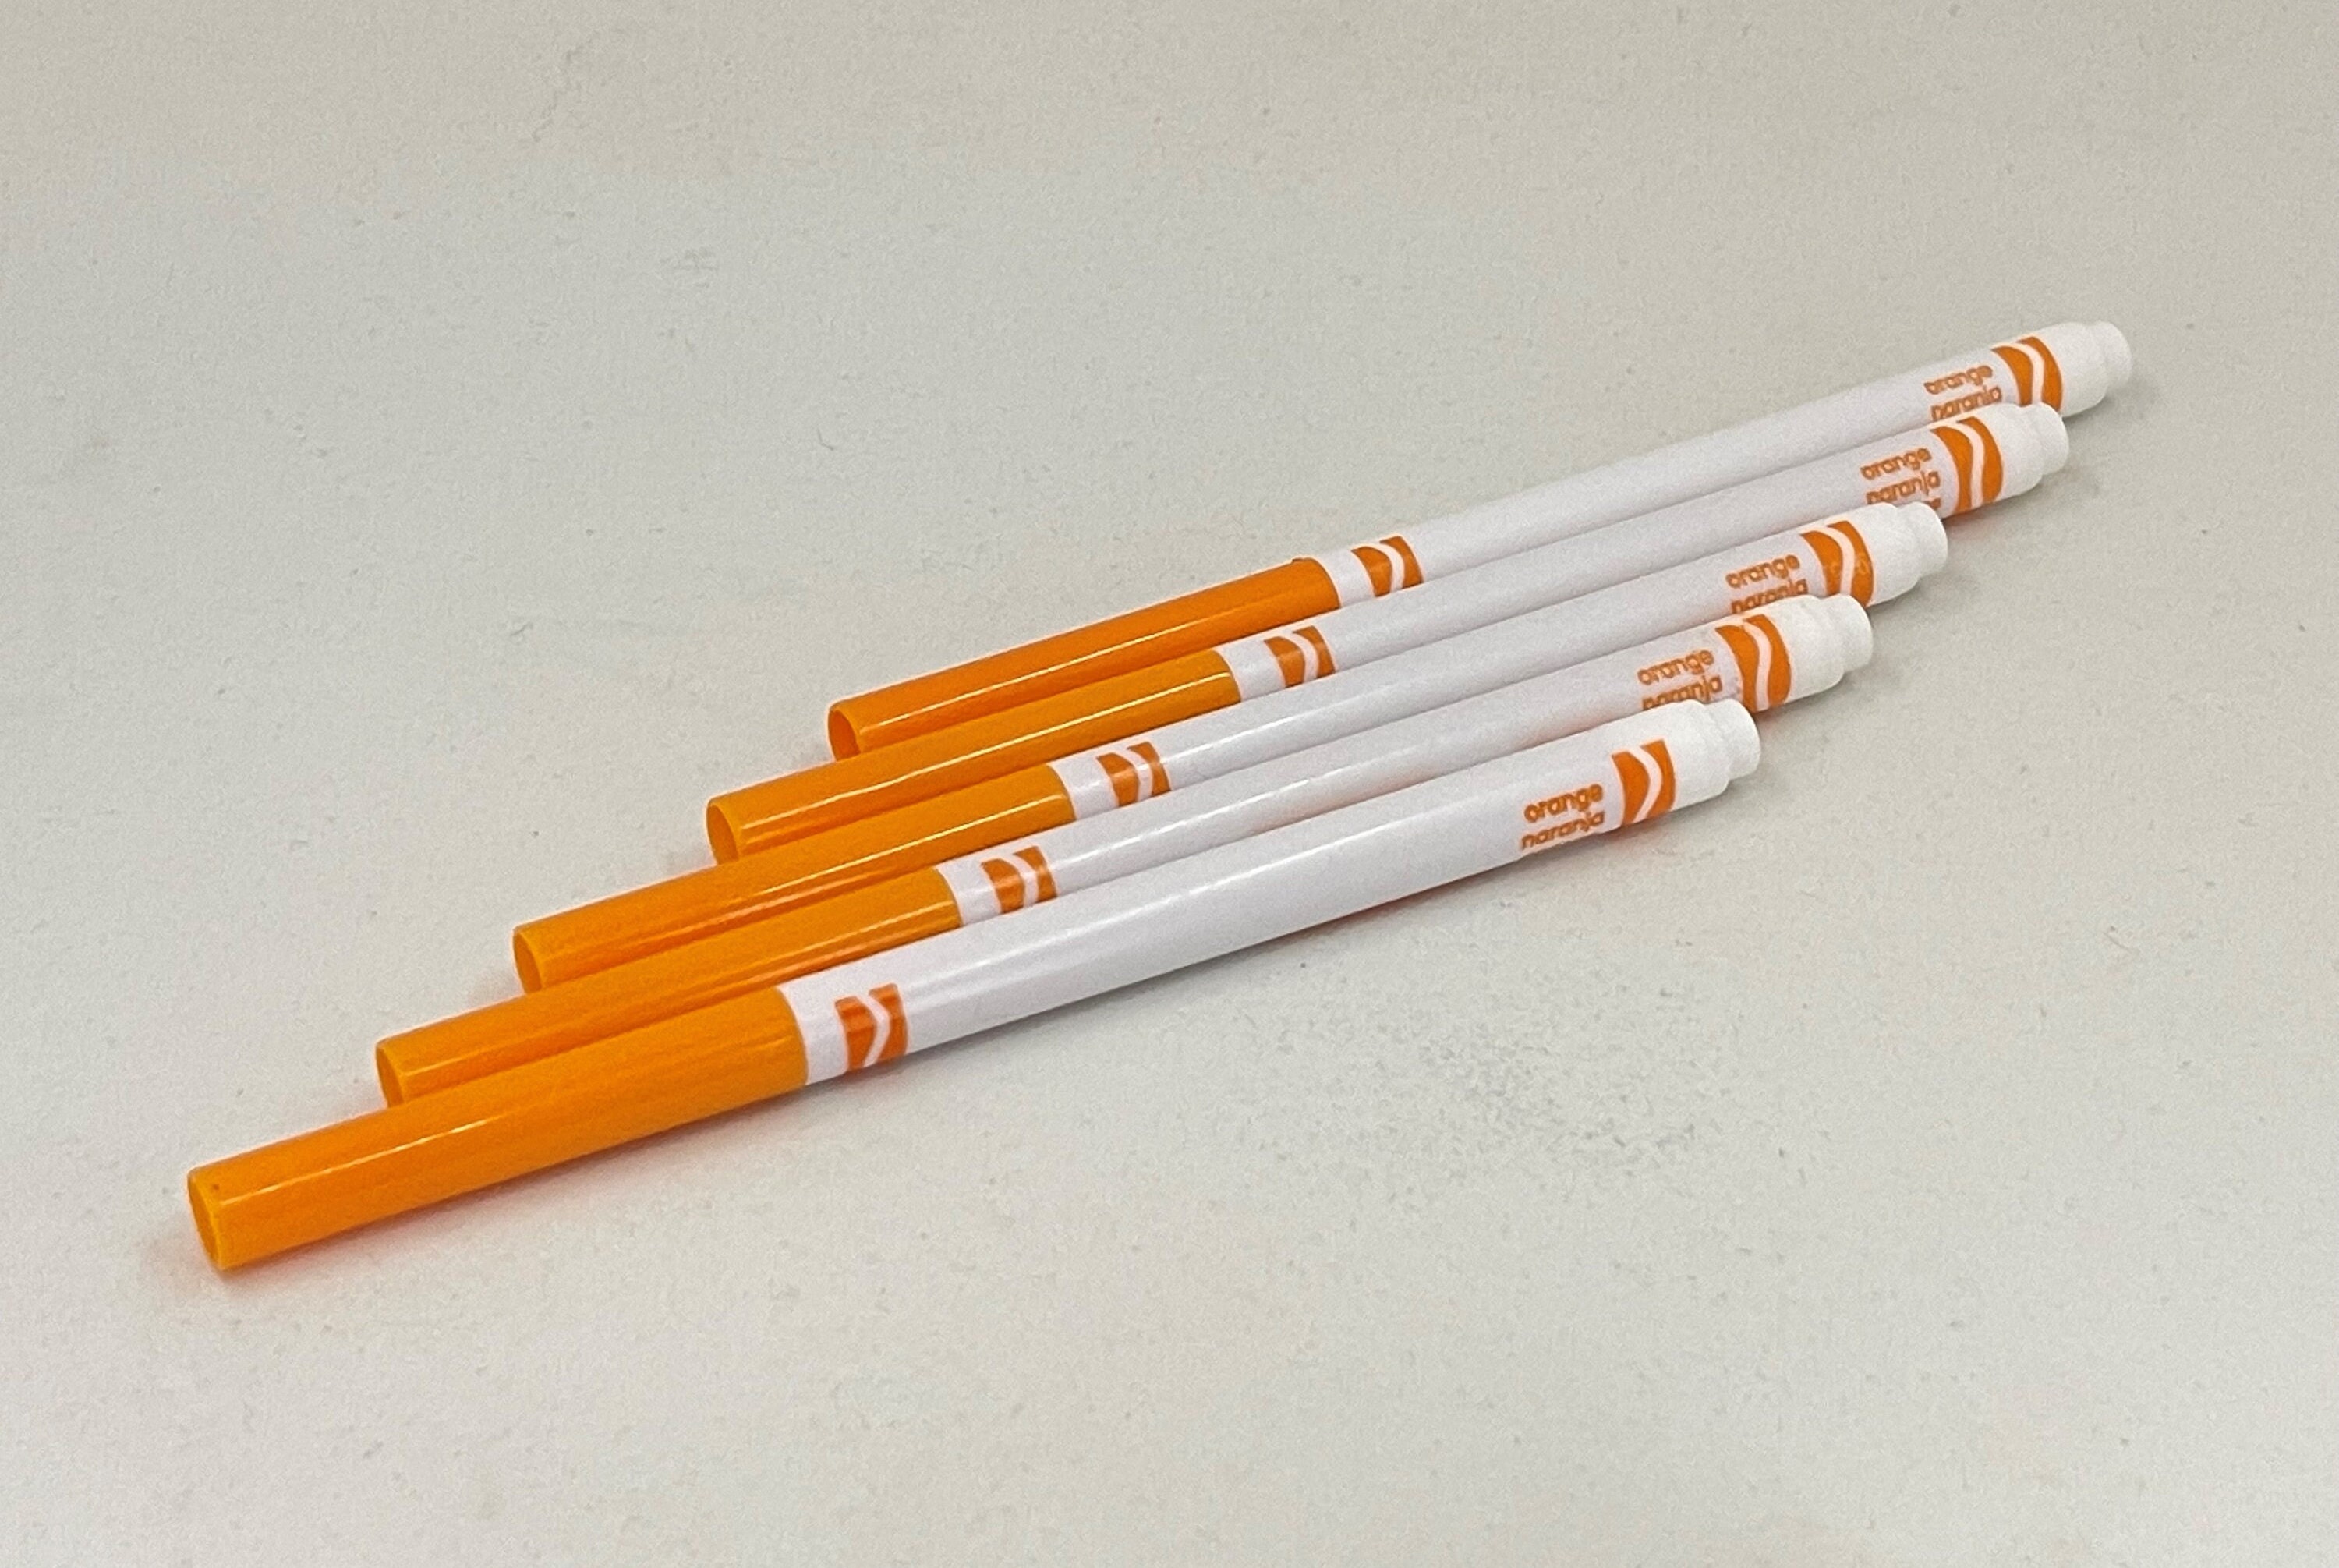 New Crayola Colored Pencils 12 Count Orange